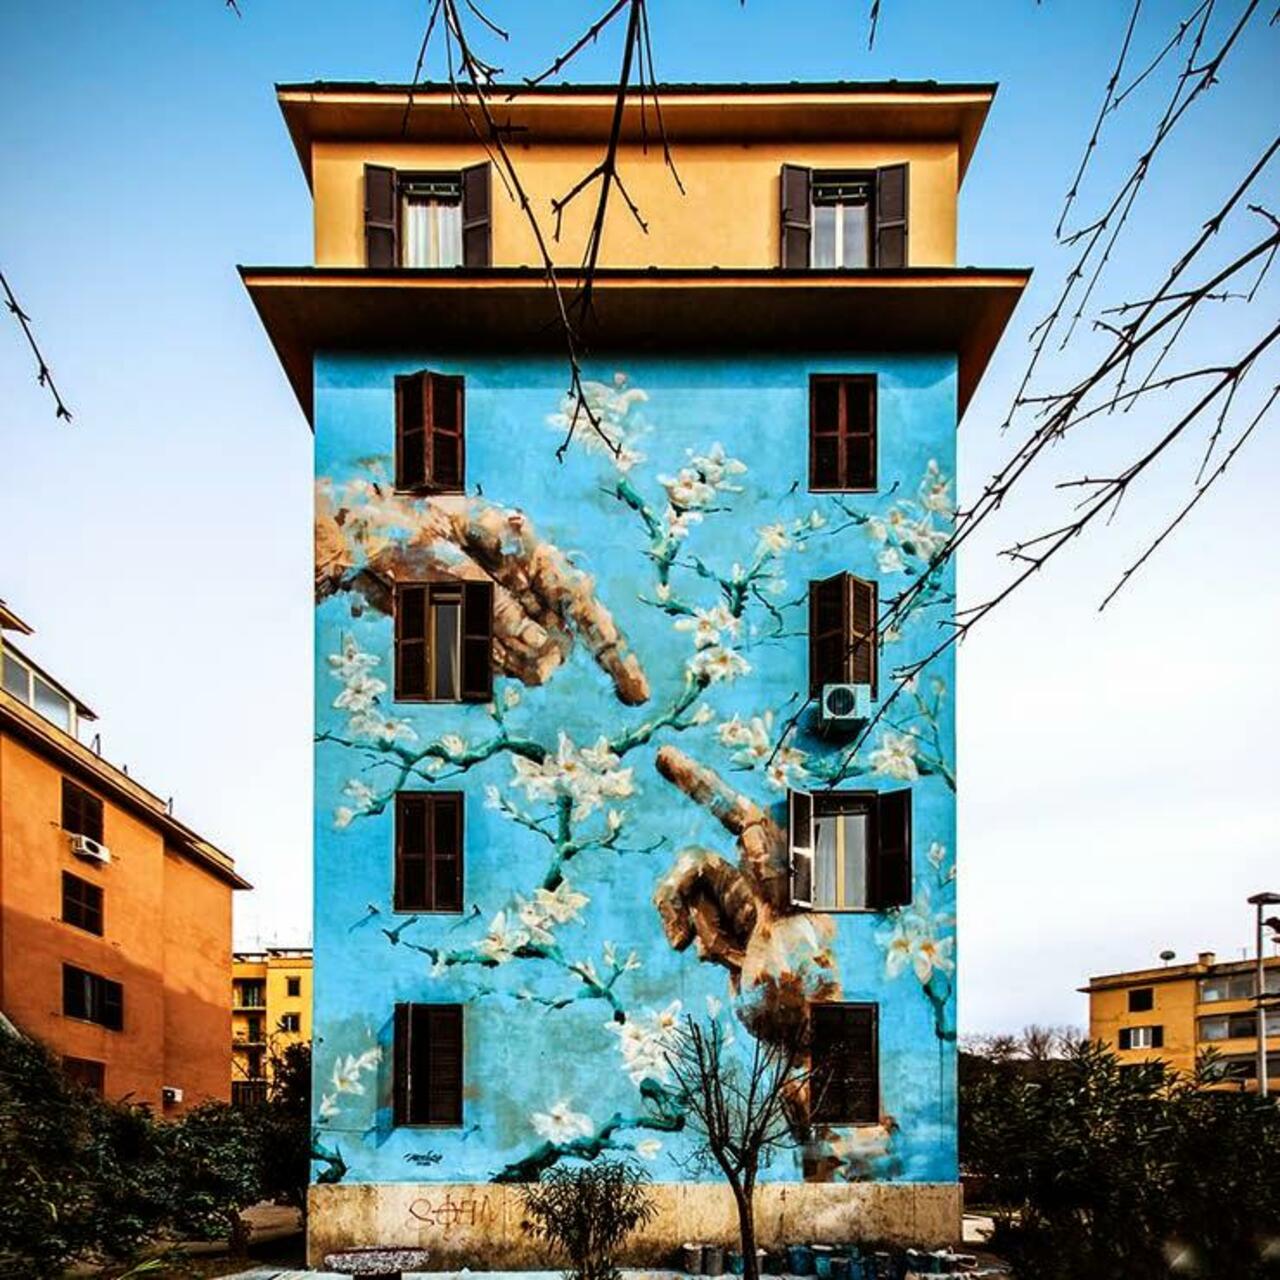 RT @LWEstateAgent Amazing #StreetArt in Rome, Italy by Jericho
#Graffiti #Mural #Painting #Art
http://bit.ly/1xFmRoO http://t.co/Zc1awjYbTi